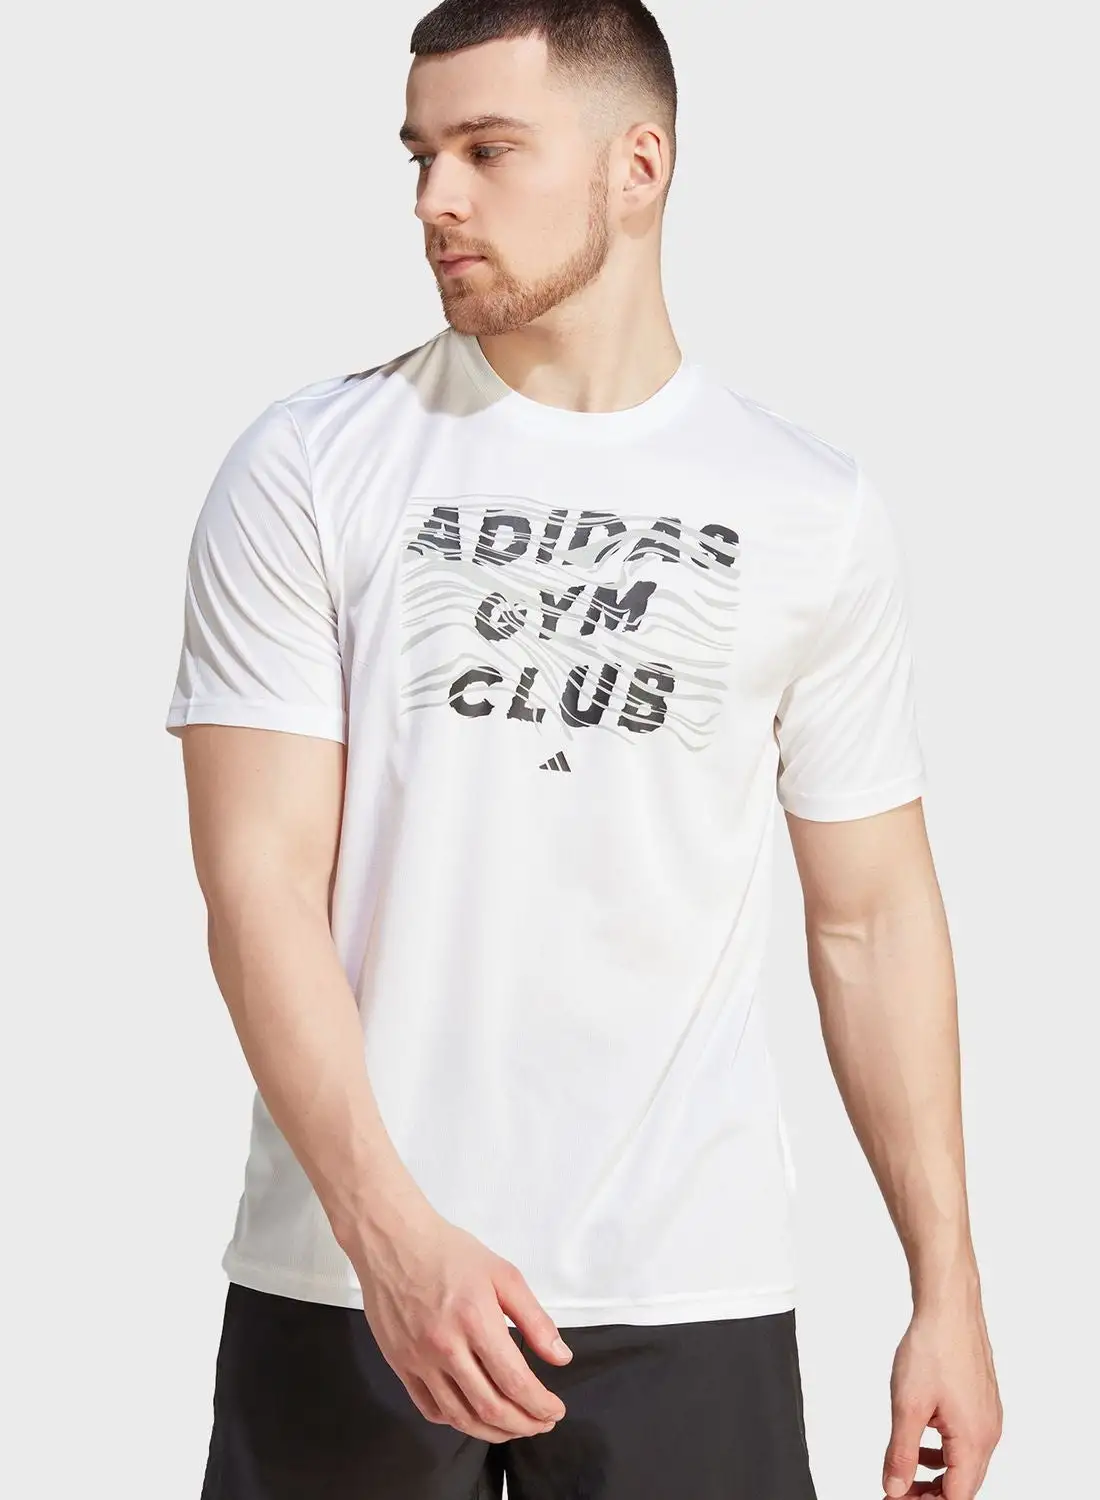 Adidas Hiit Gfx T-Shirt